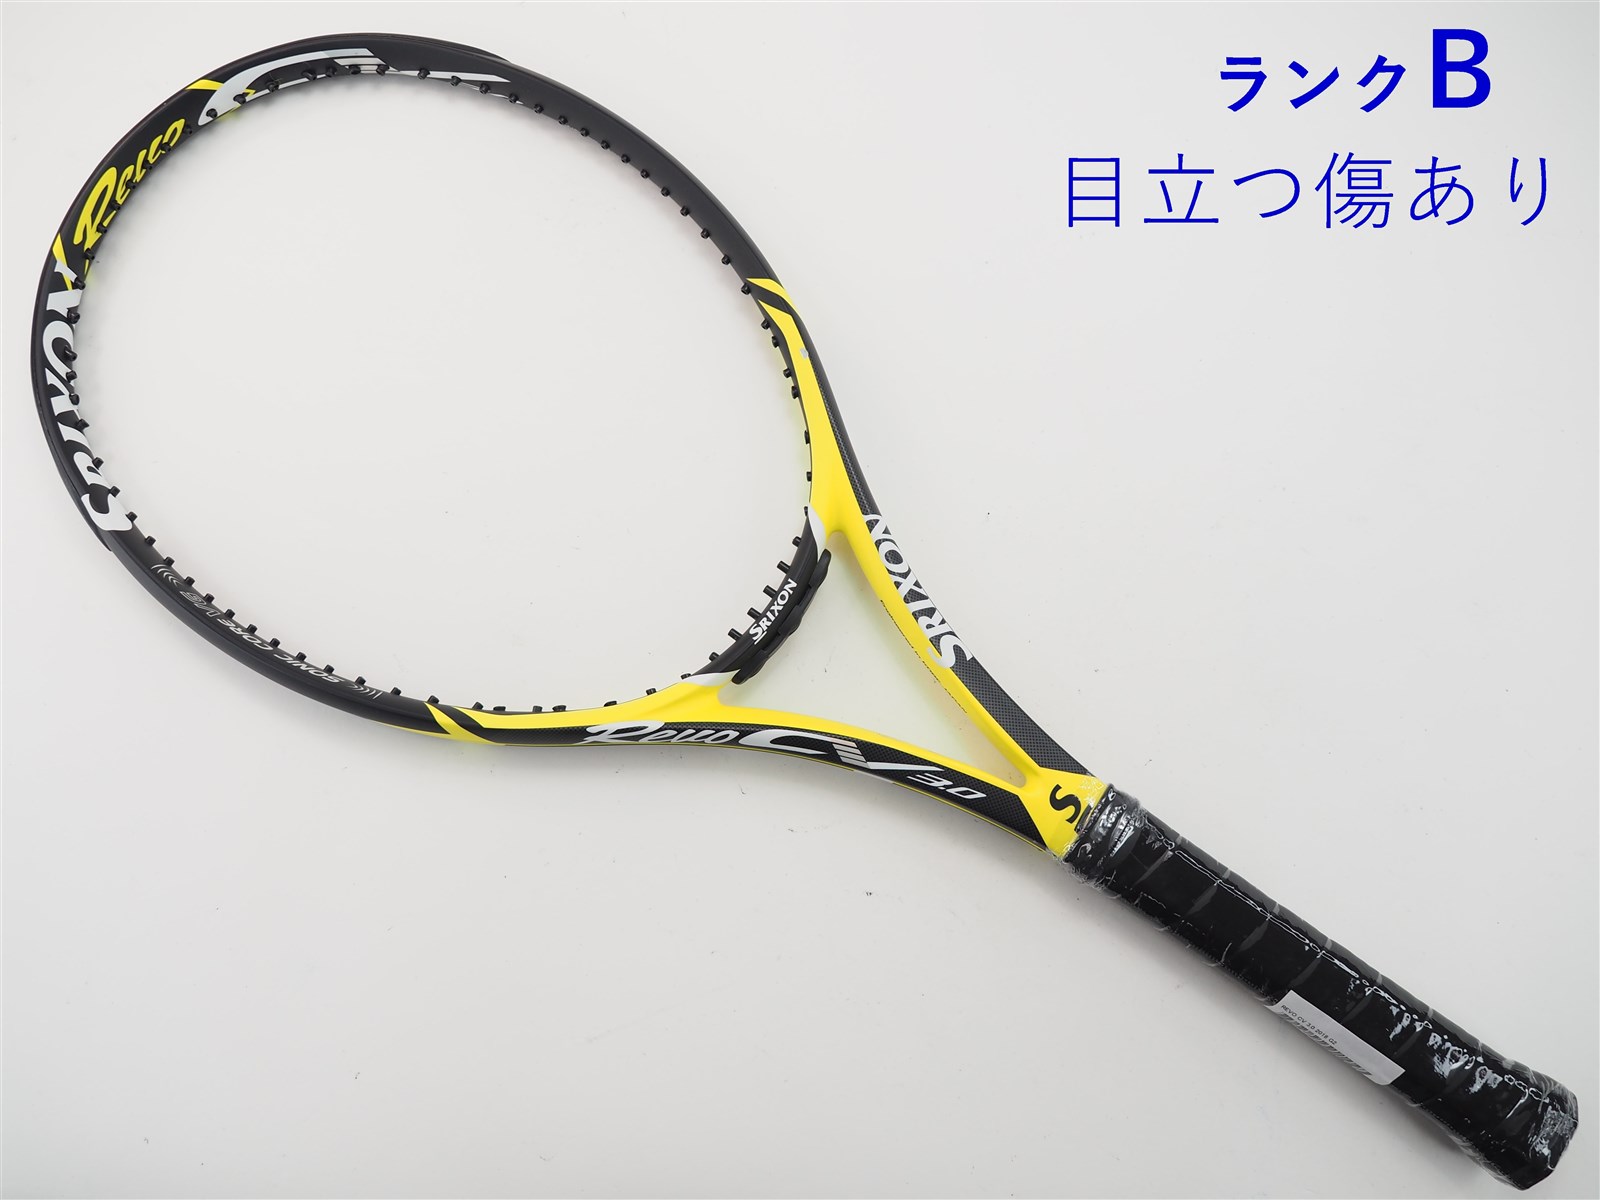 23-26-21mm重量テニスラケット スリクソン レヴォ CV 3.0 2016年モデル (G2)SRIXON REVO CV 3.0 2016